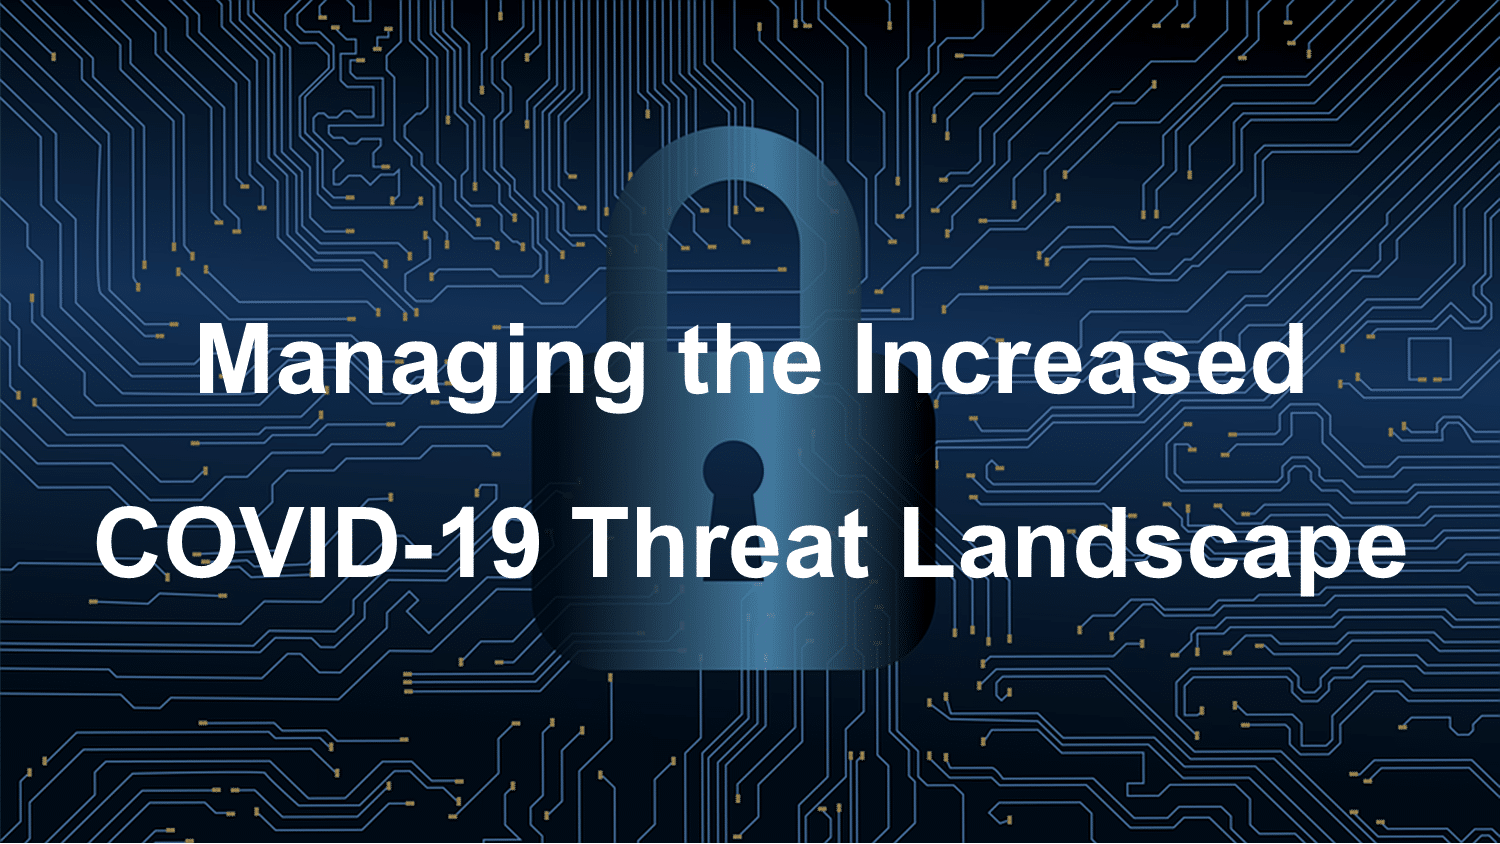 COVID-19 threat landscape